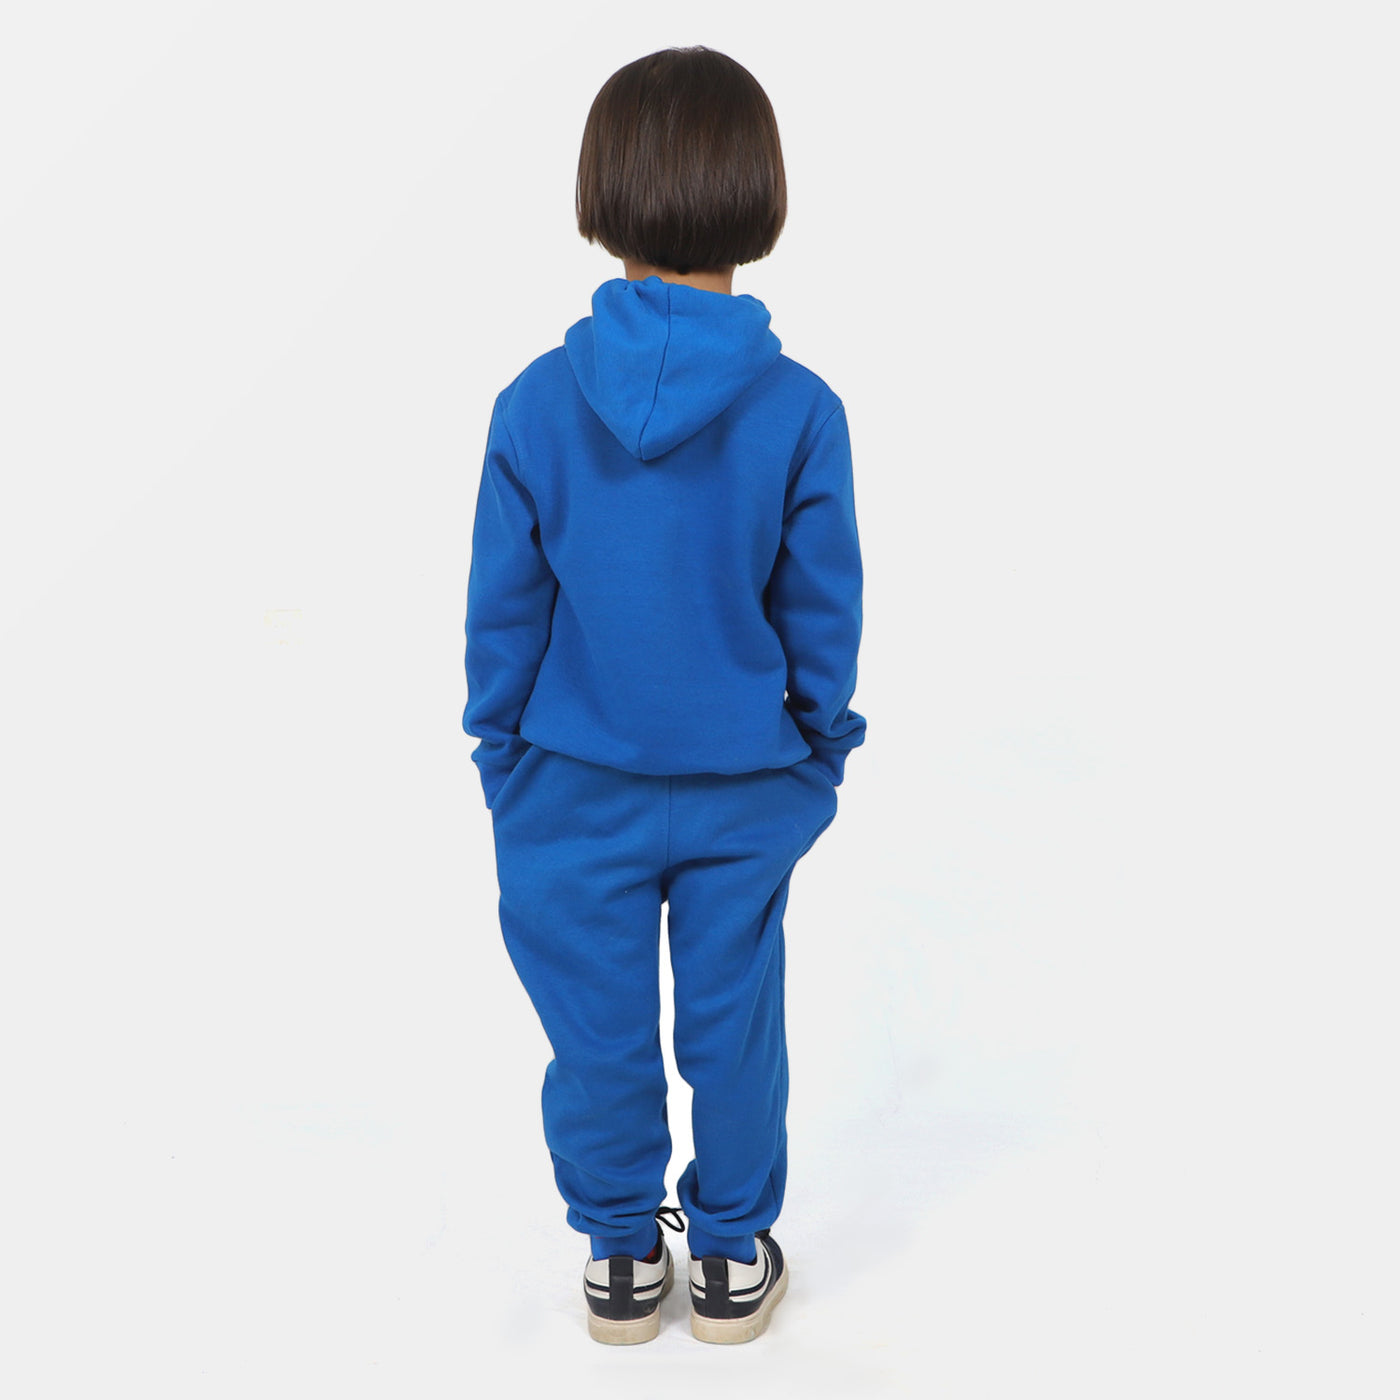 Boys 2 Pcs Suit Cartoon Character - Royal Blue